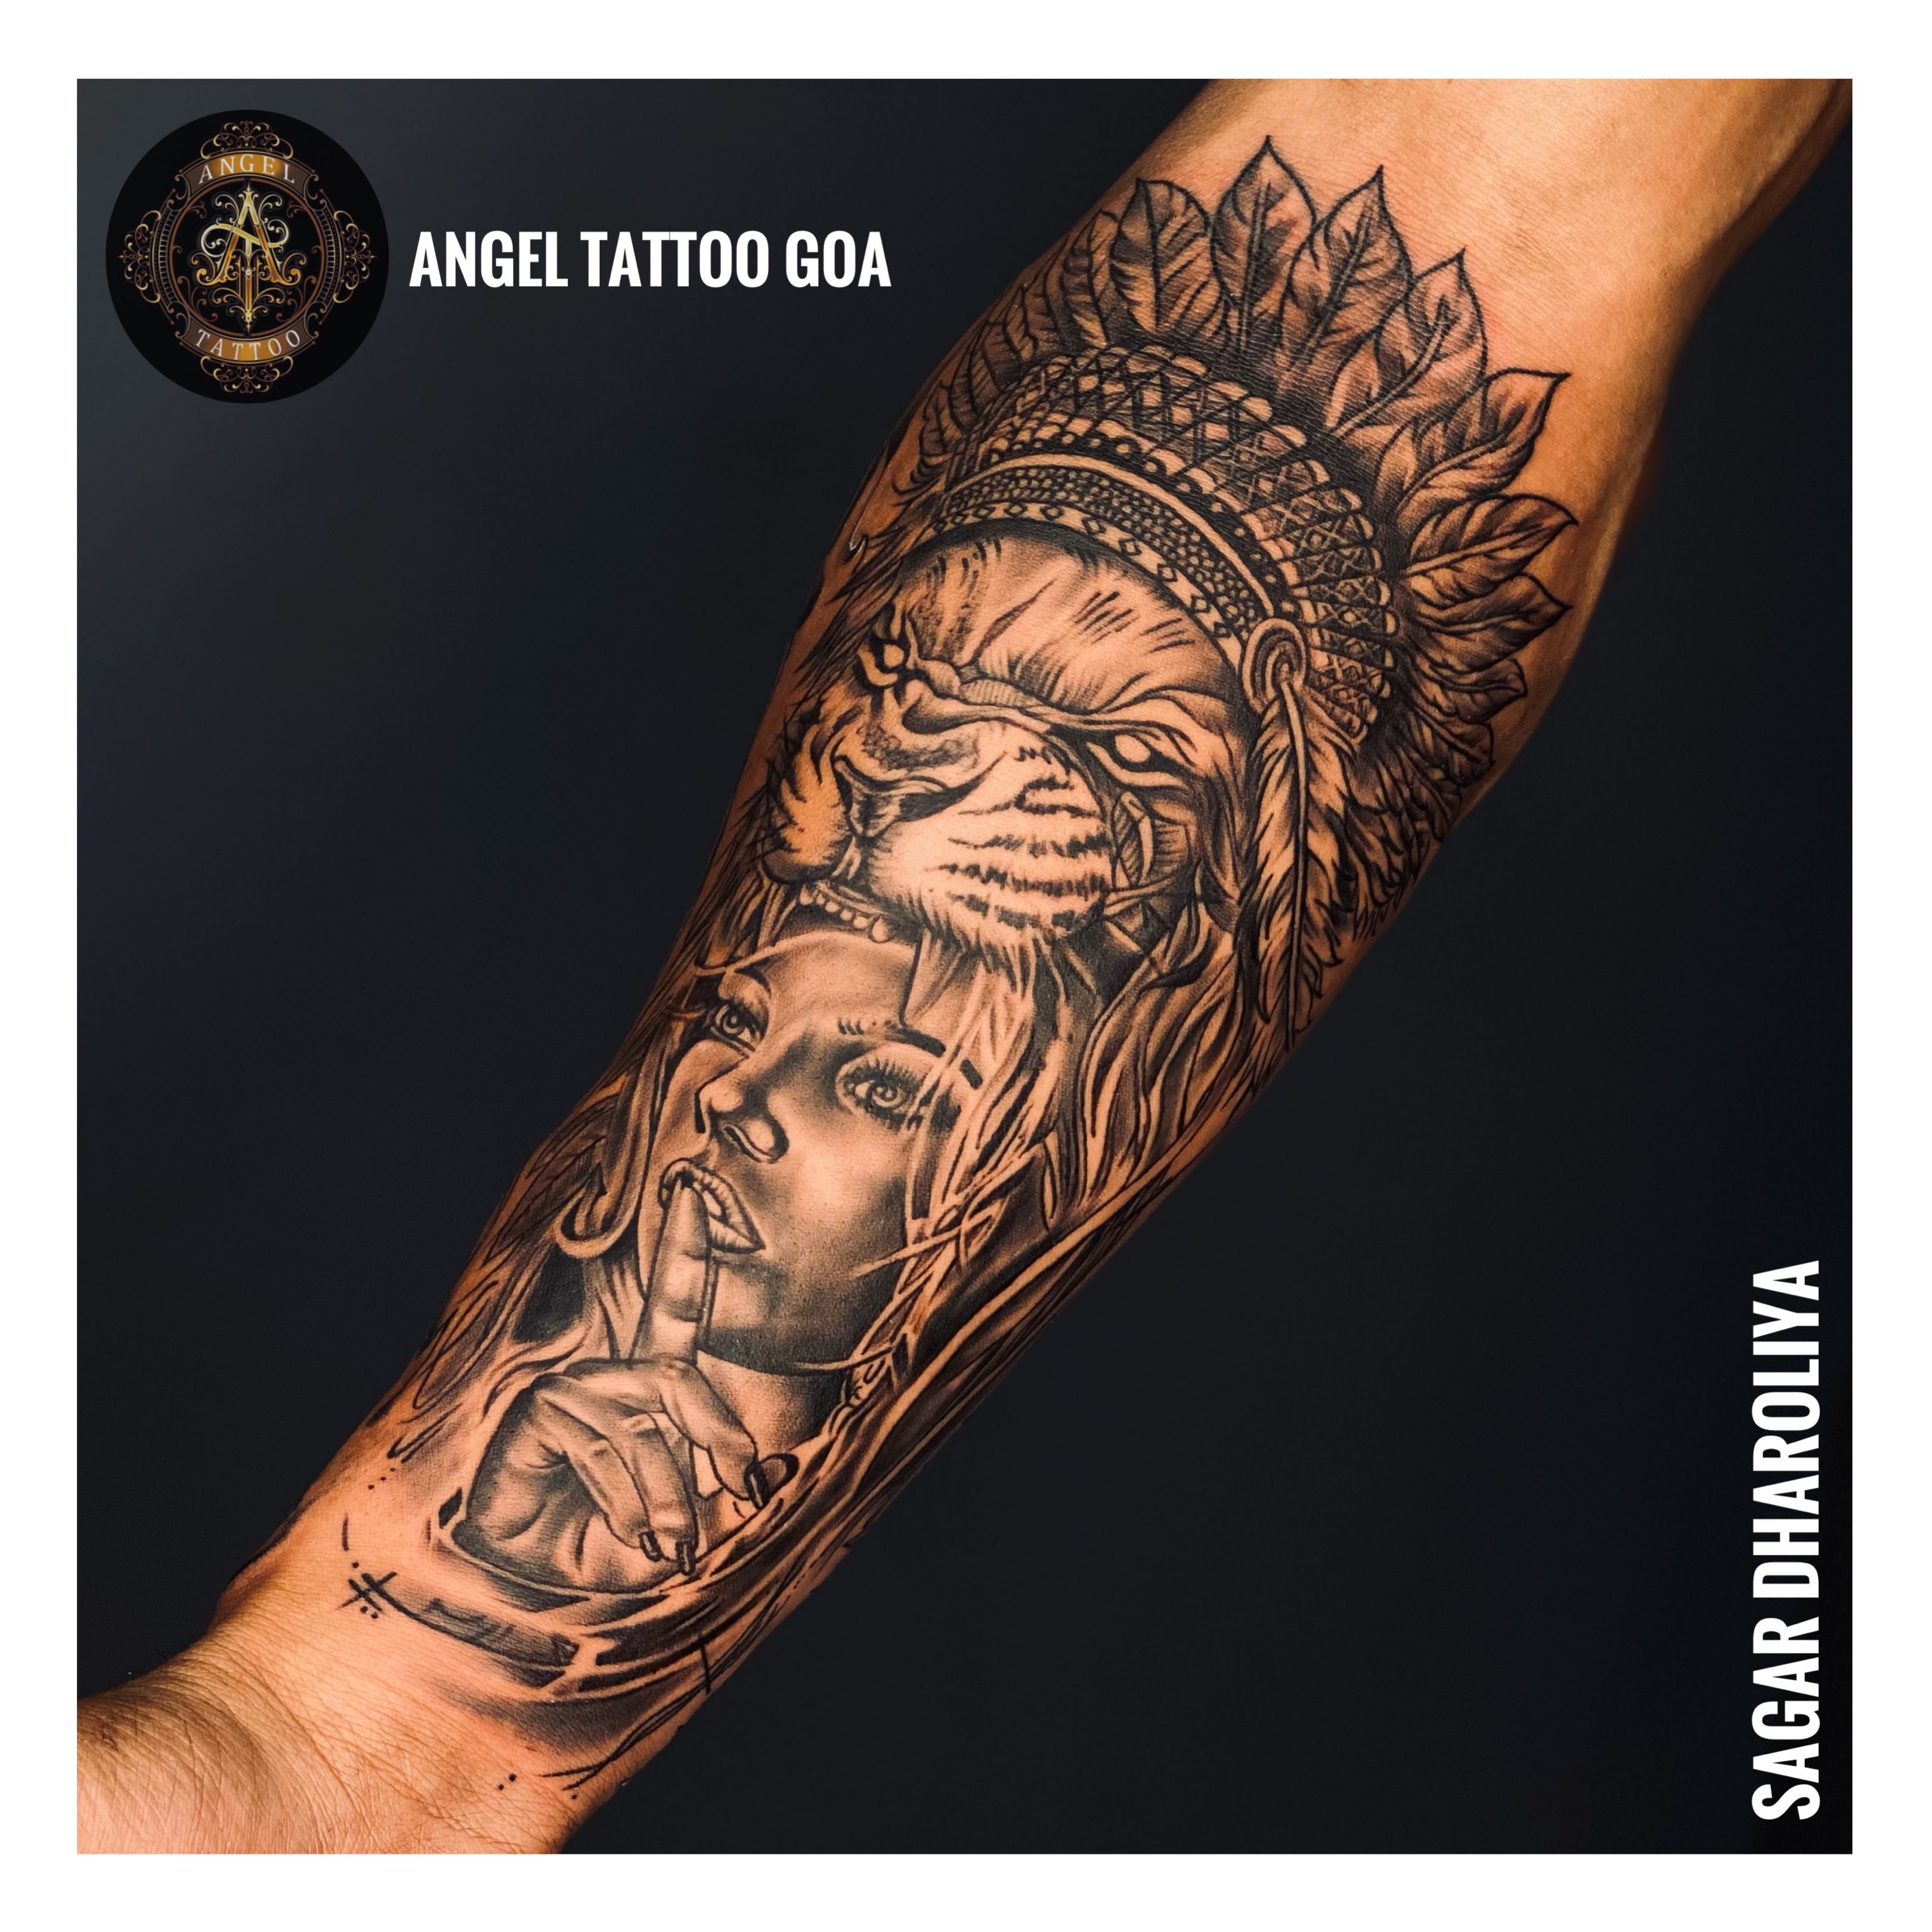 Triangle Tattoo By Sagar... - Angel Tattoo Studio Goa | Facebook